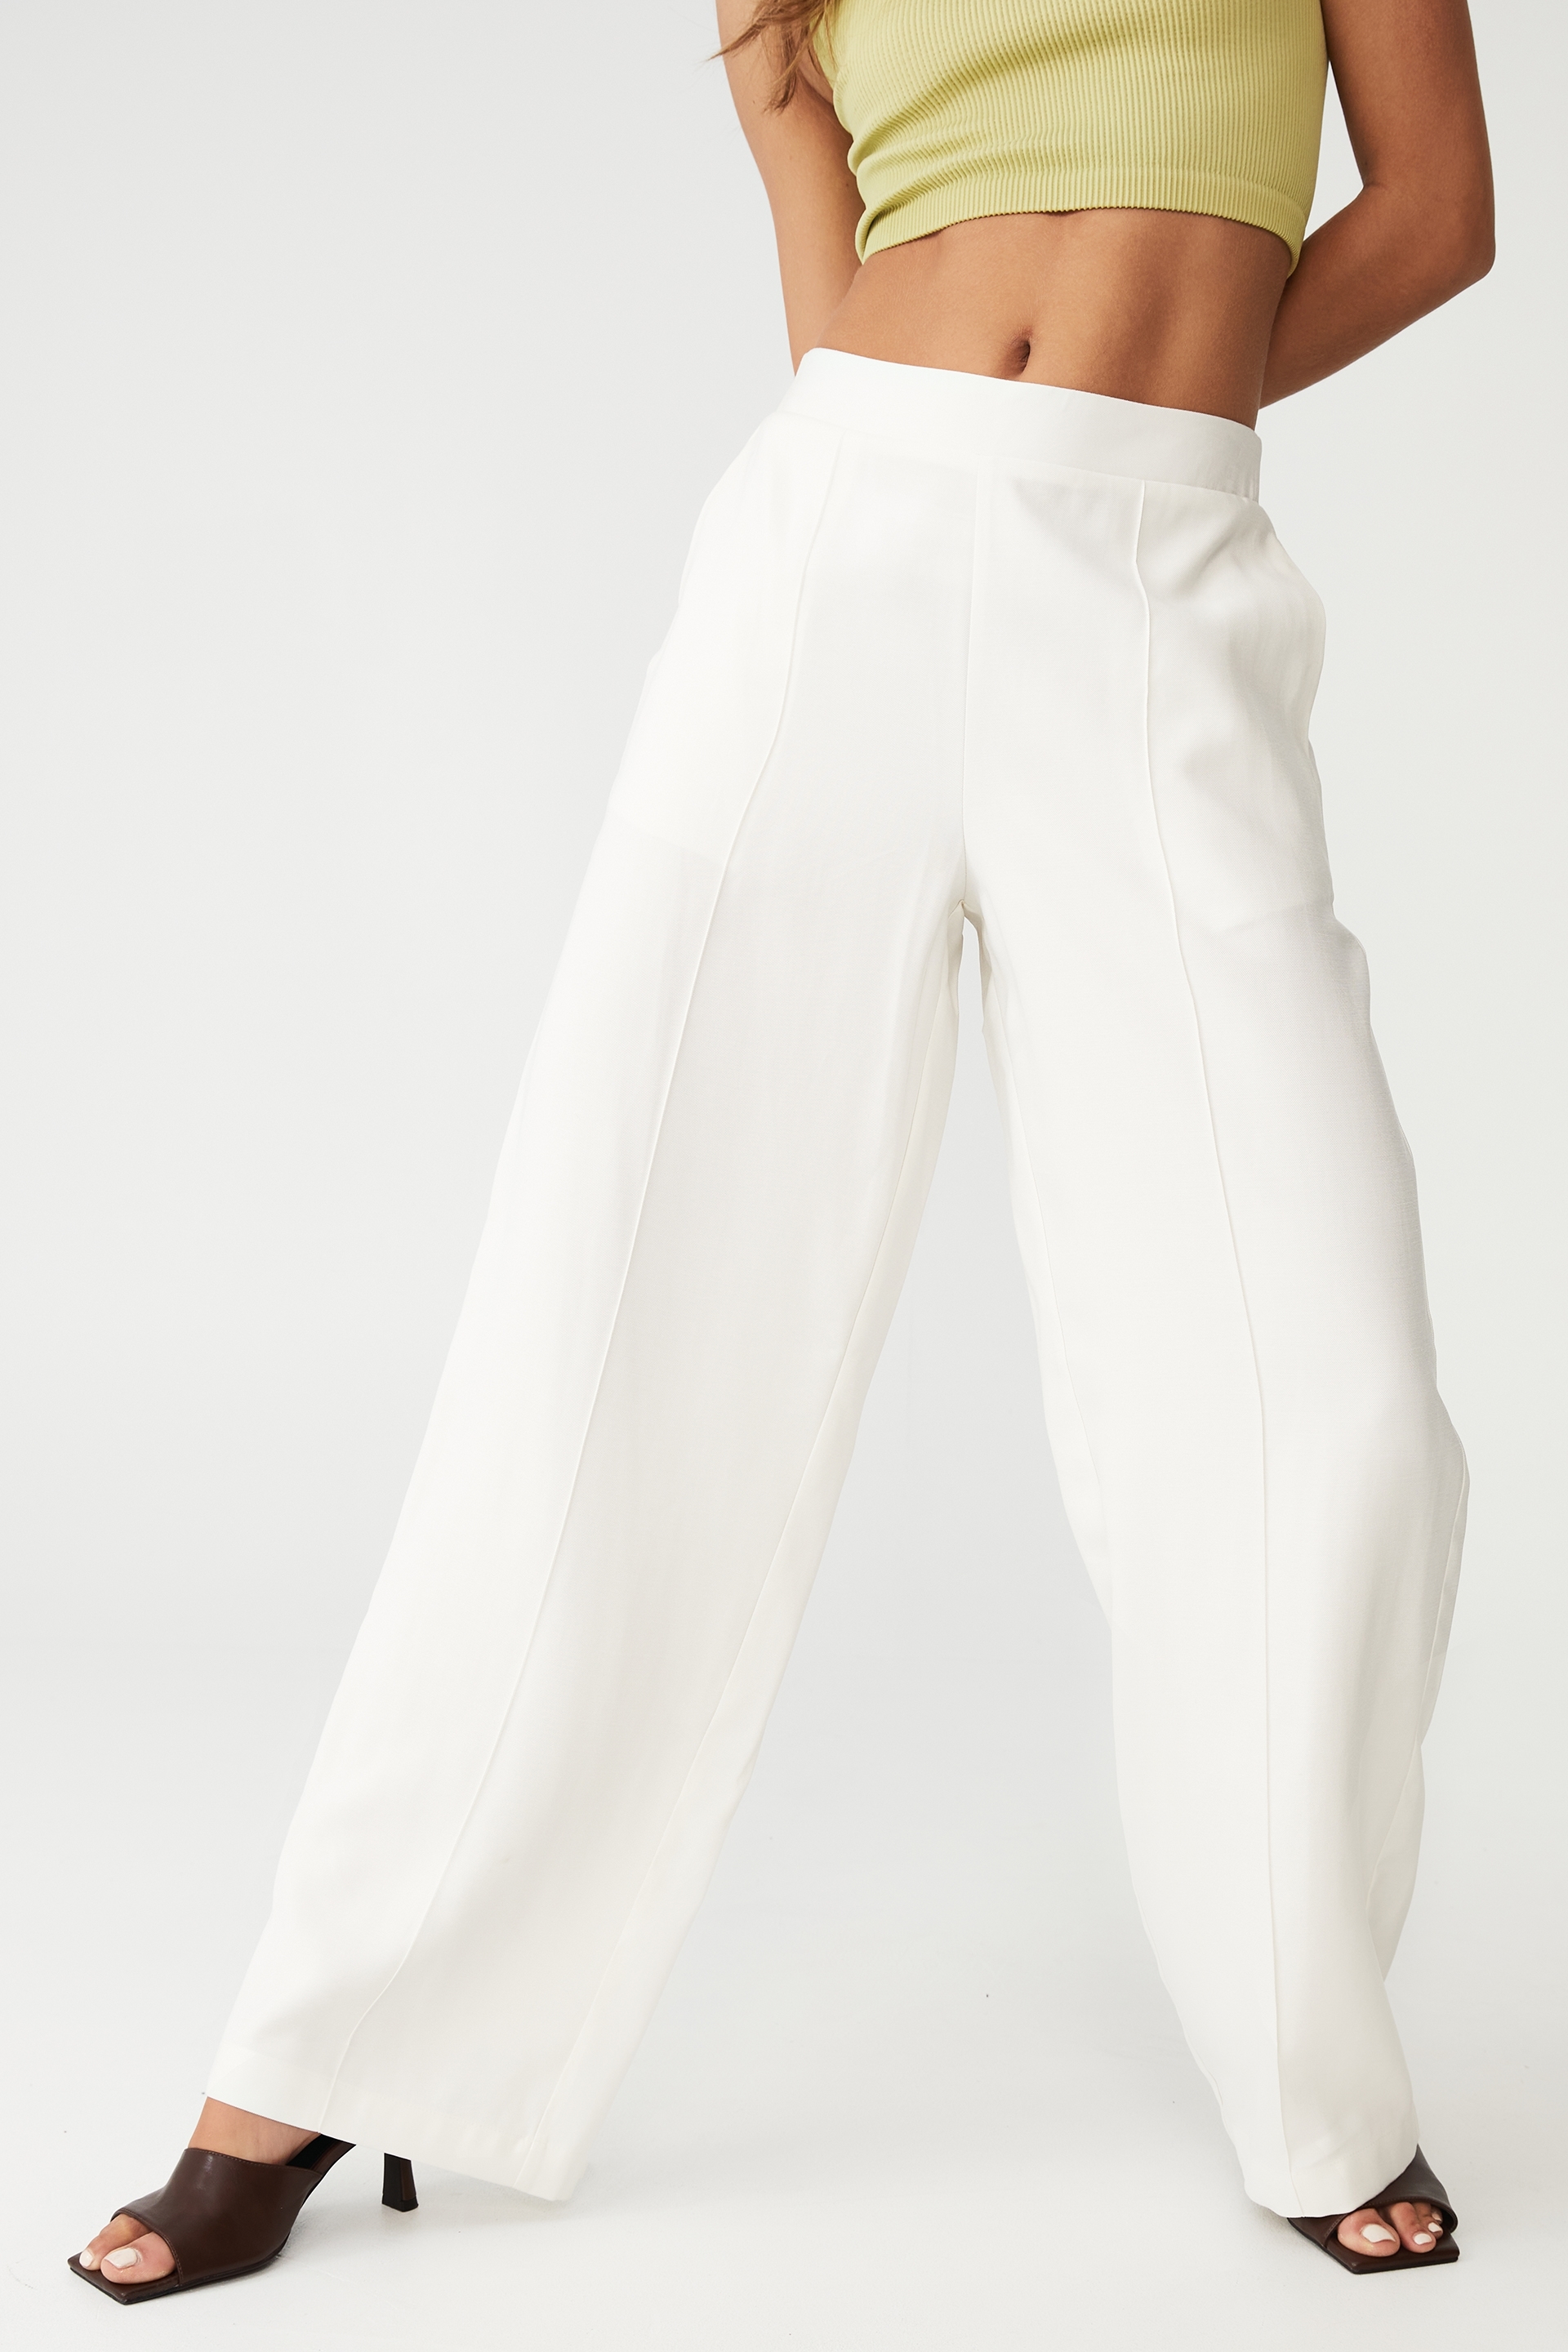 Cotton On Women - Straight Pintuck Pant - Chalk white